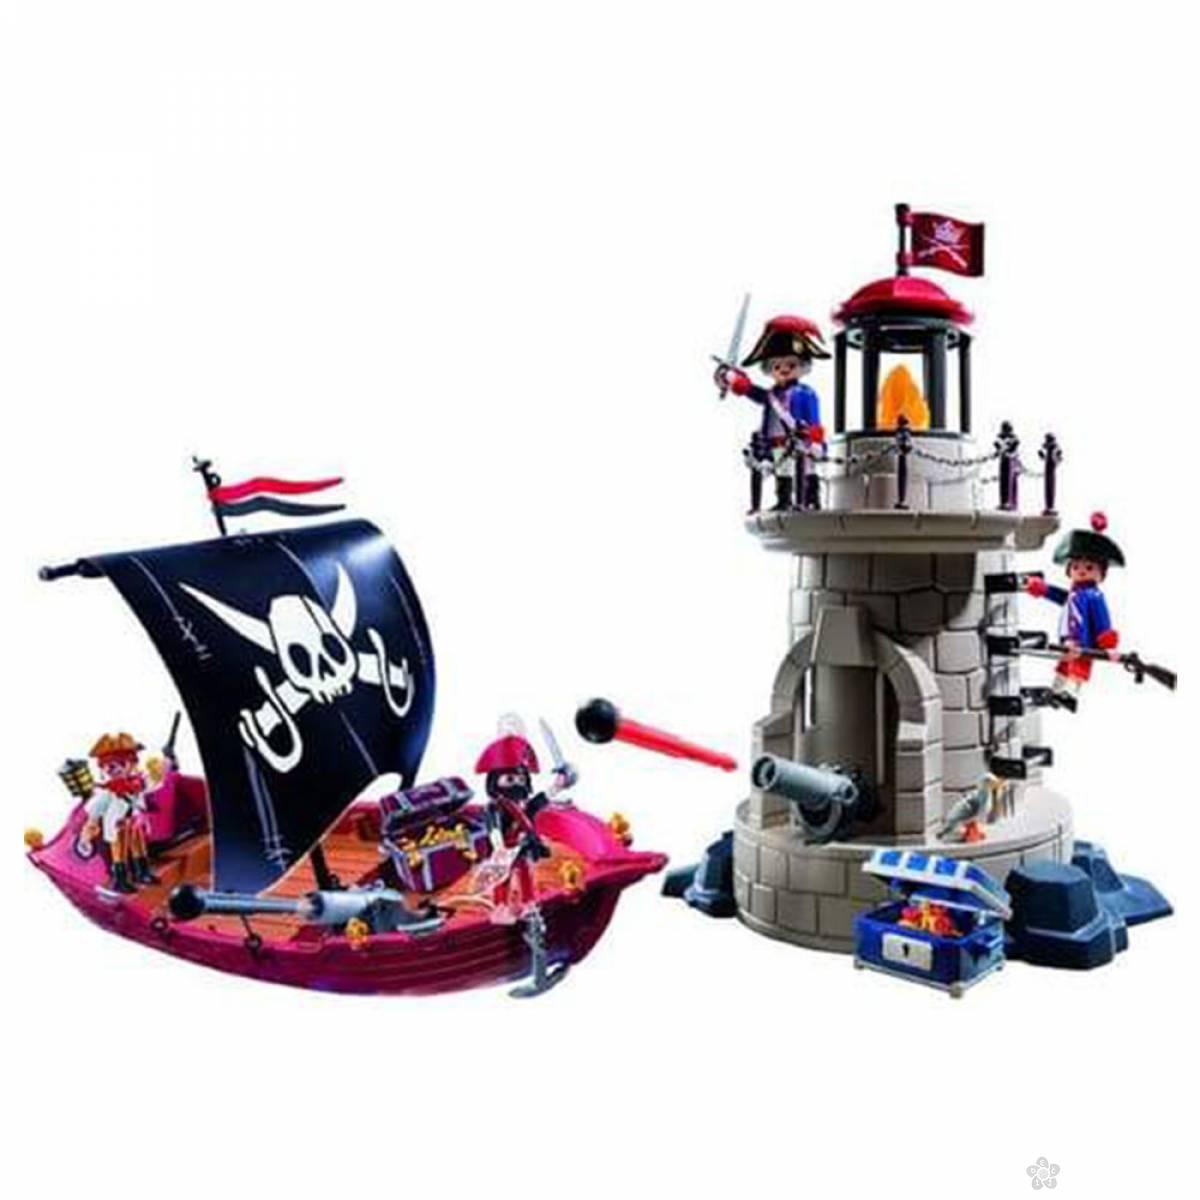 Playmobile Pirati set 20209 